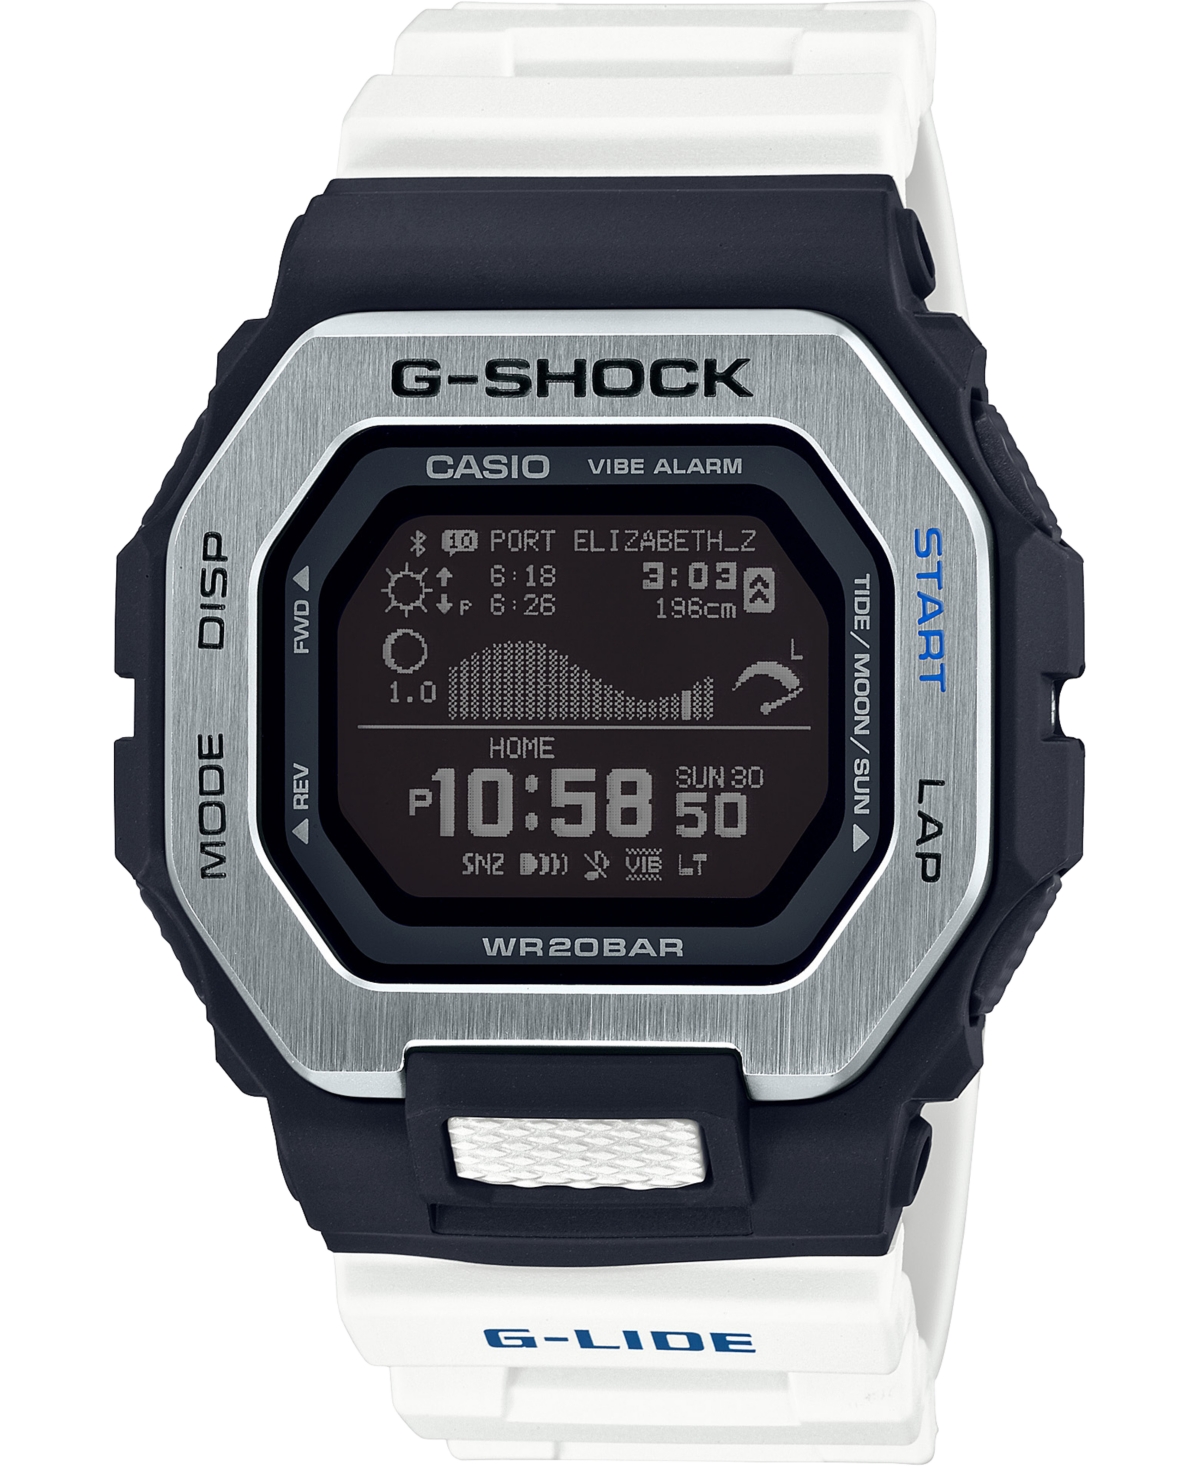 G-Shock GBX100-7 46mm Digital Watch - $120 + Free S&H at Macy's